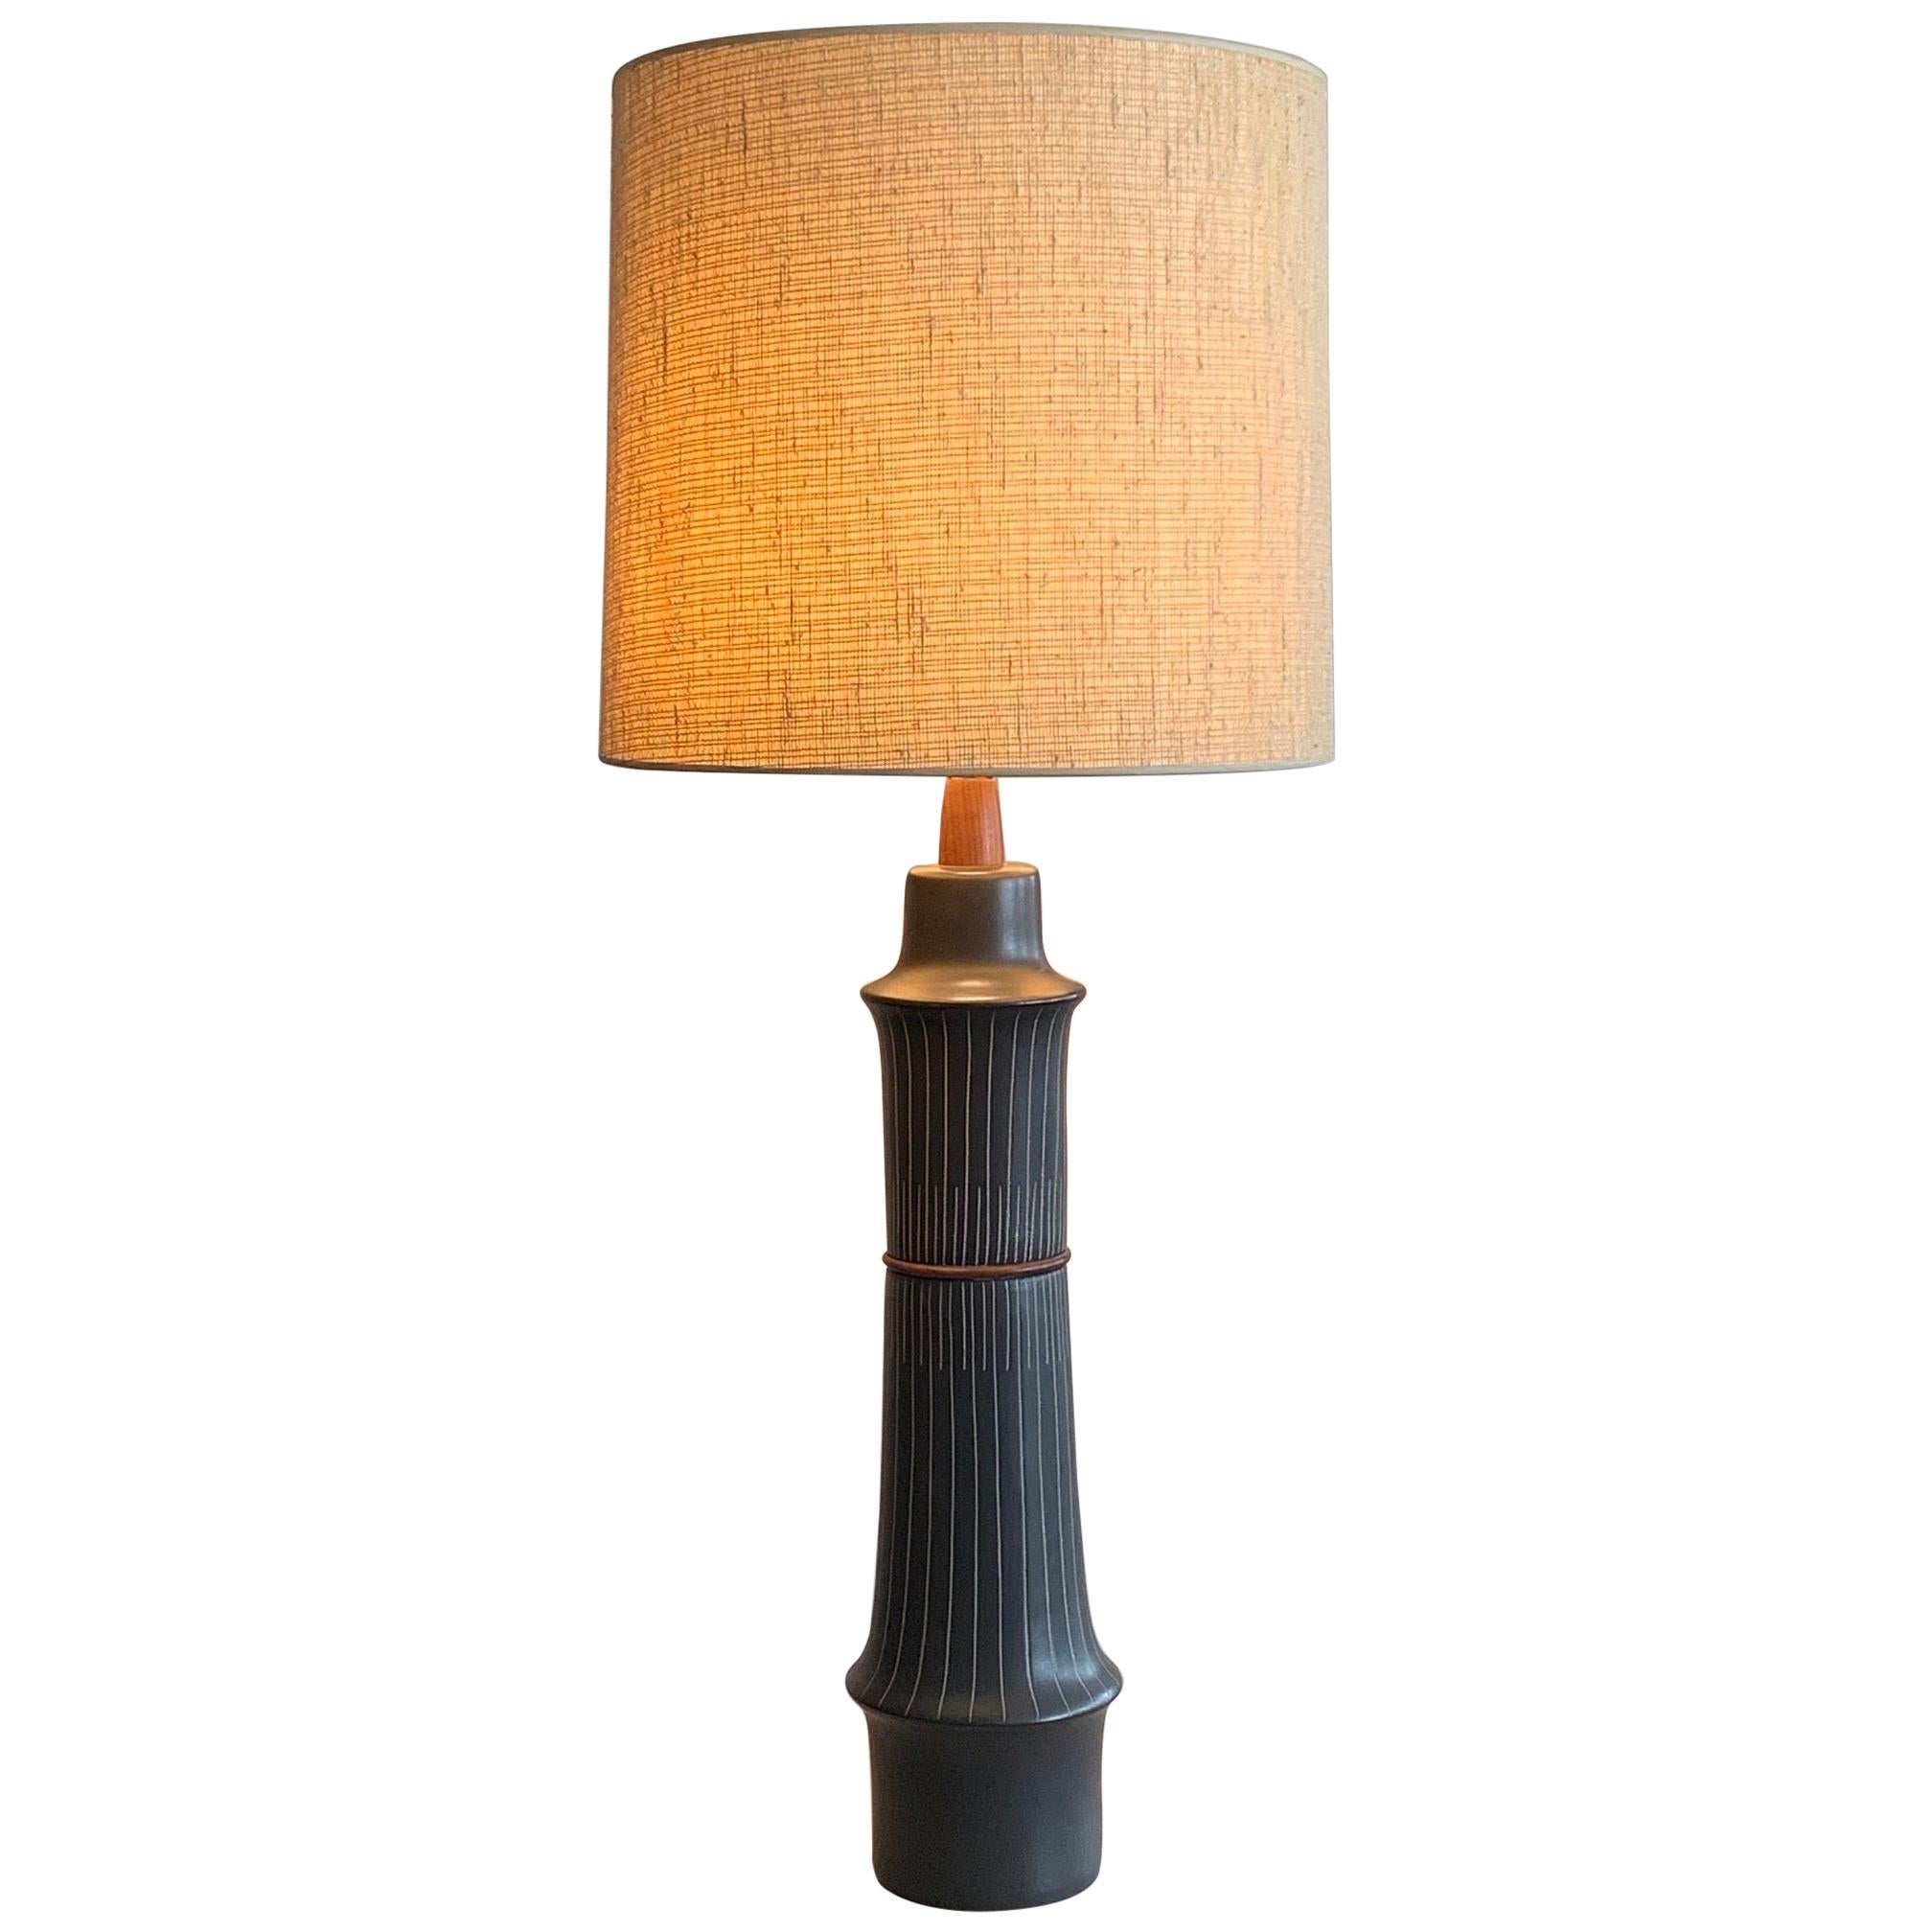 Rare Martz Lamp with Sgraffito Decoration For Sale